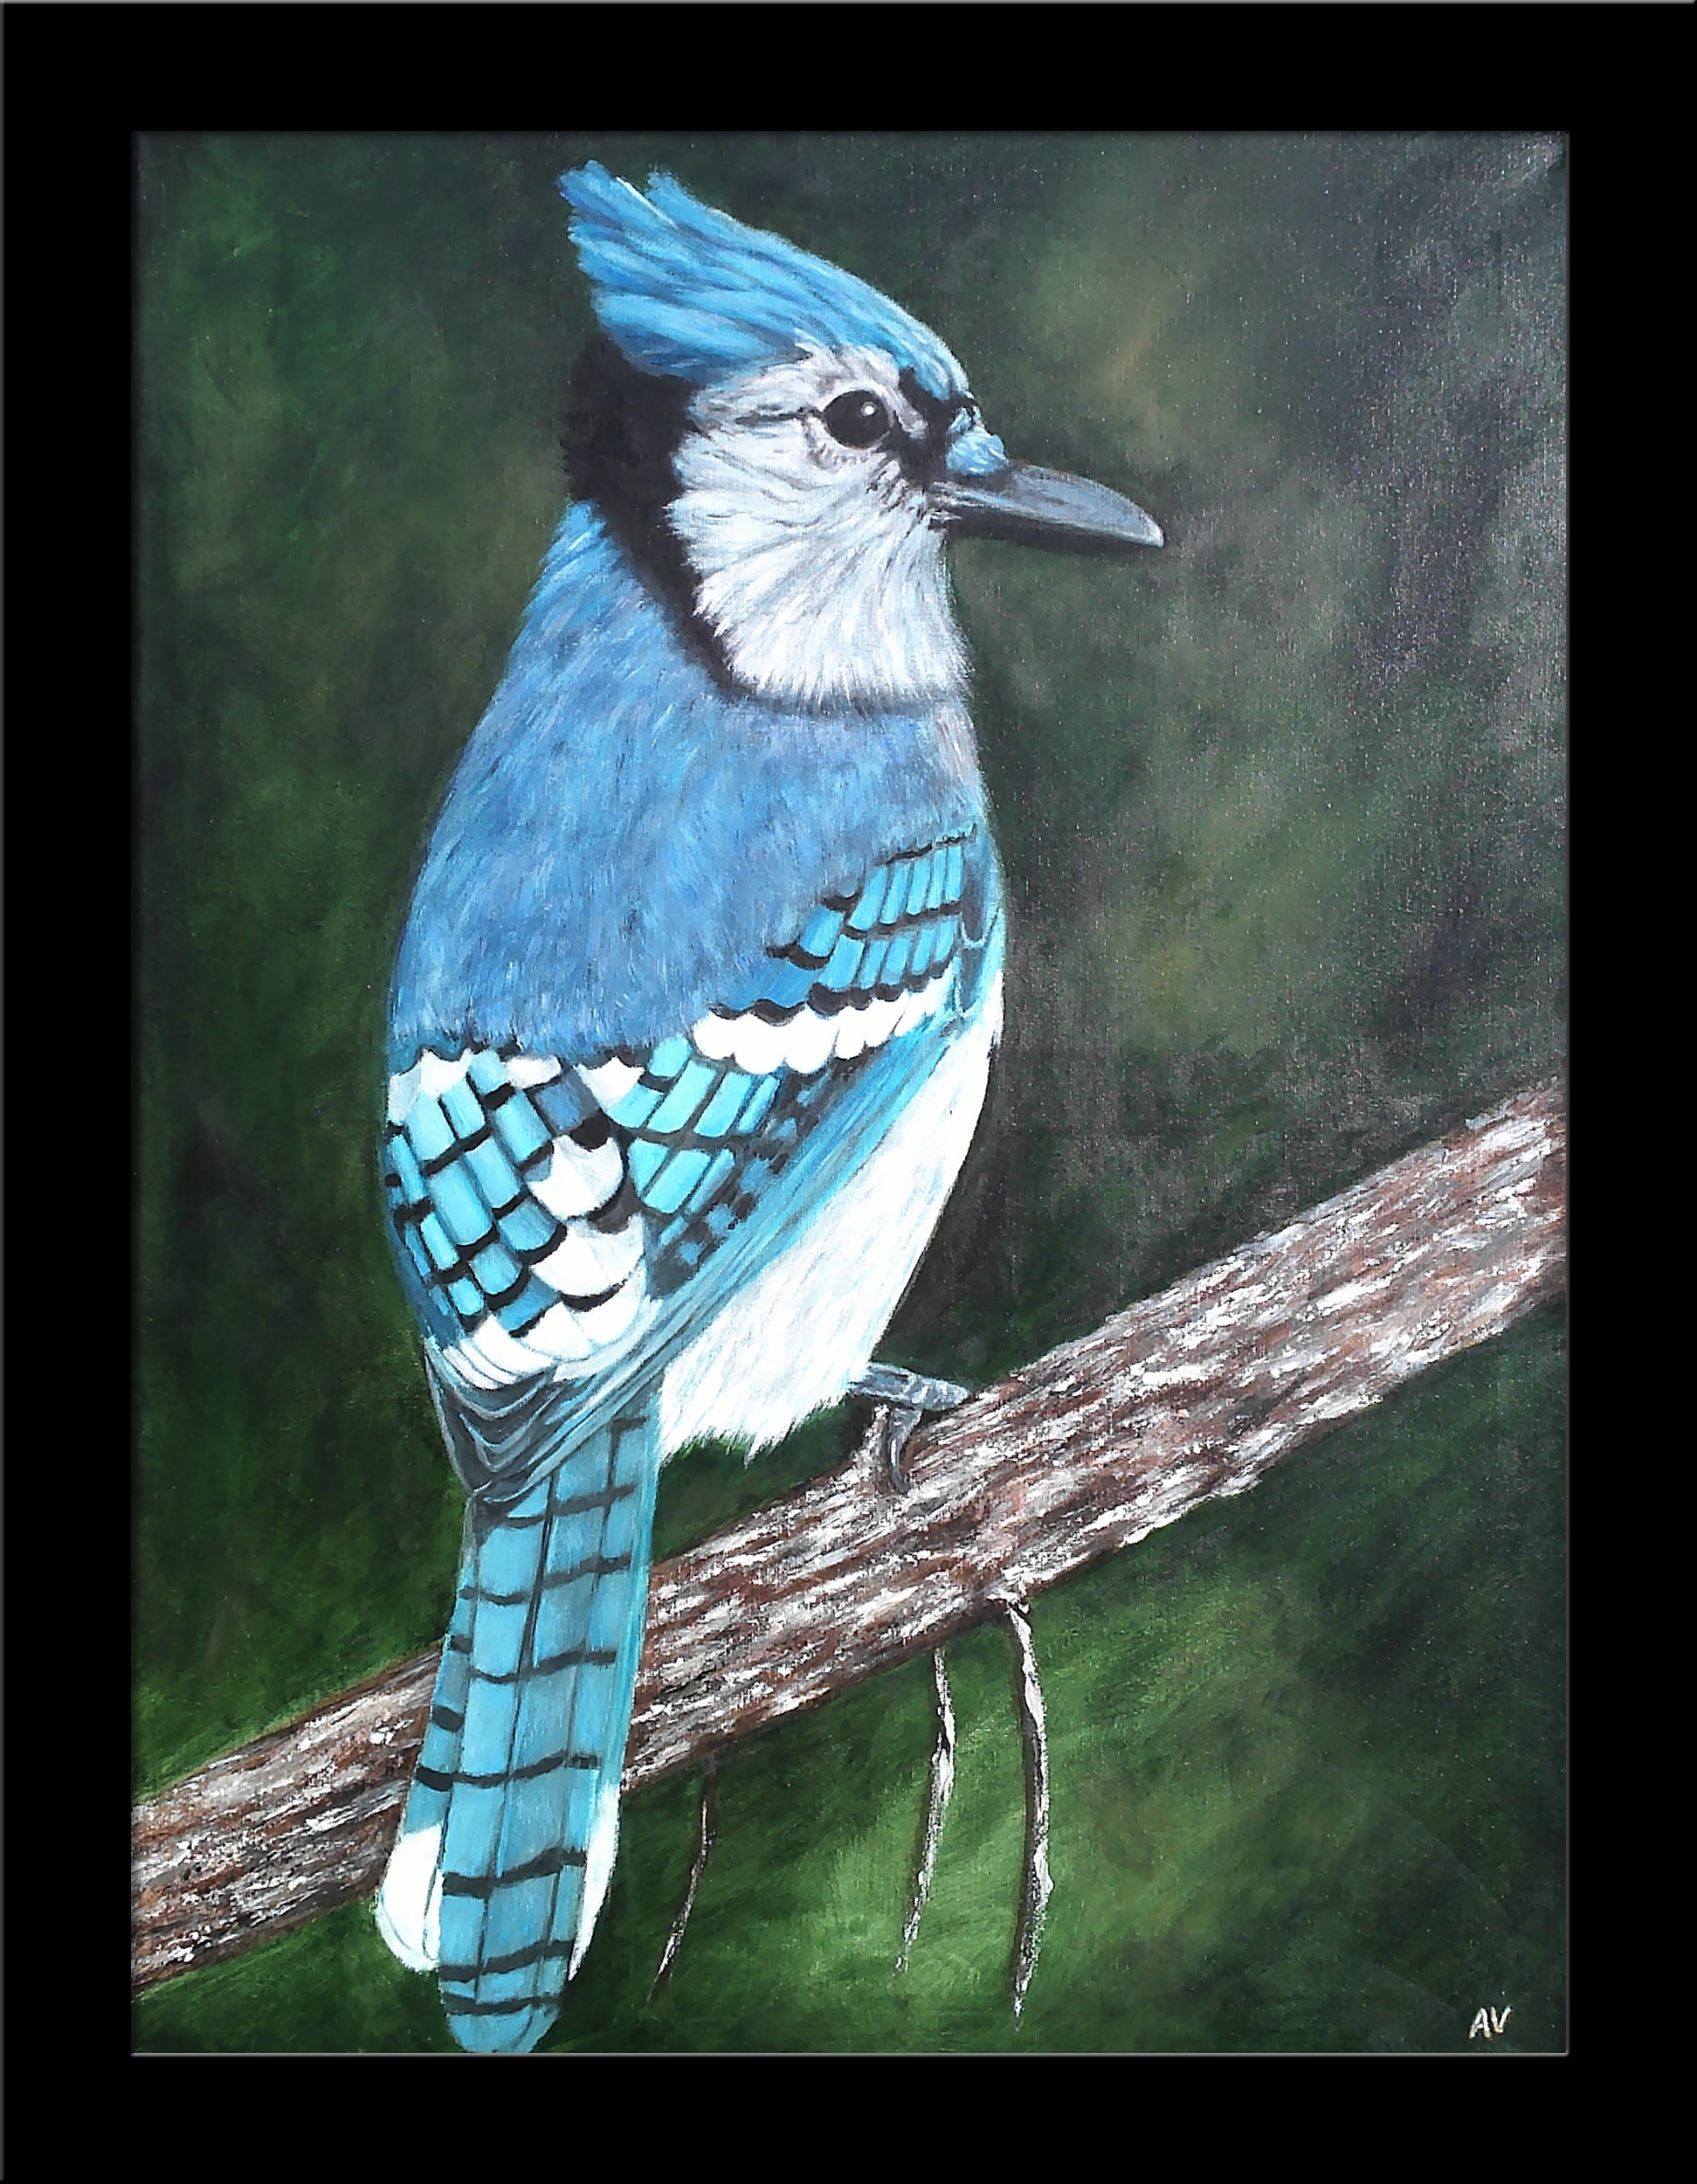 Framed Blue Jay By Amy Valiante 16x12 Bird Painting Reproduction Art Print Walmart Com Walmart Com